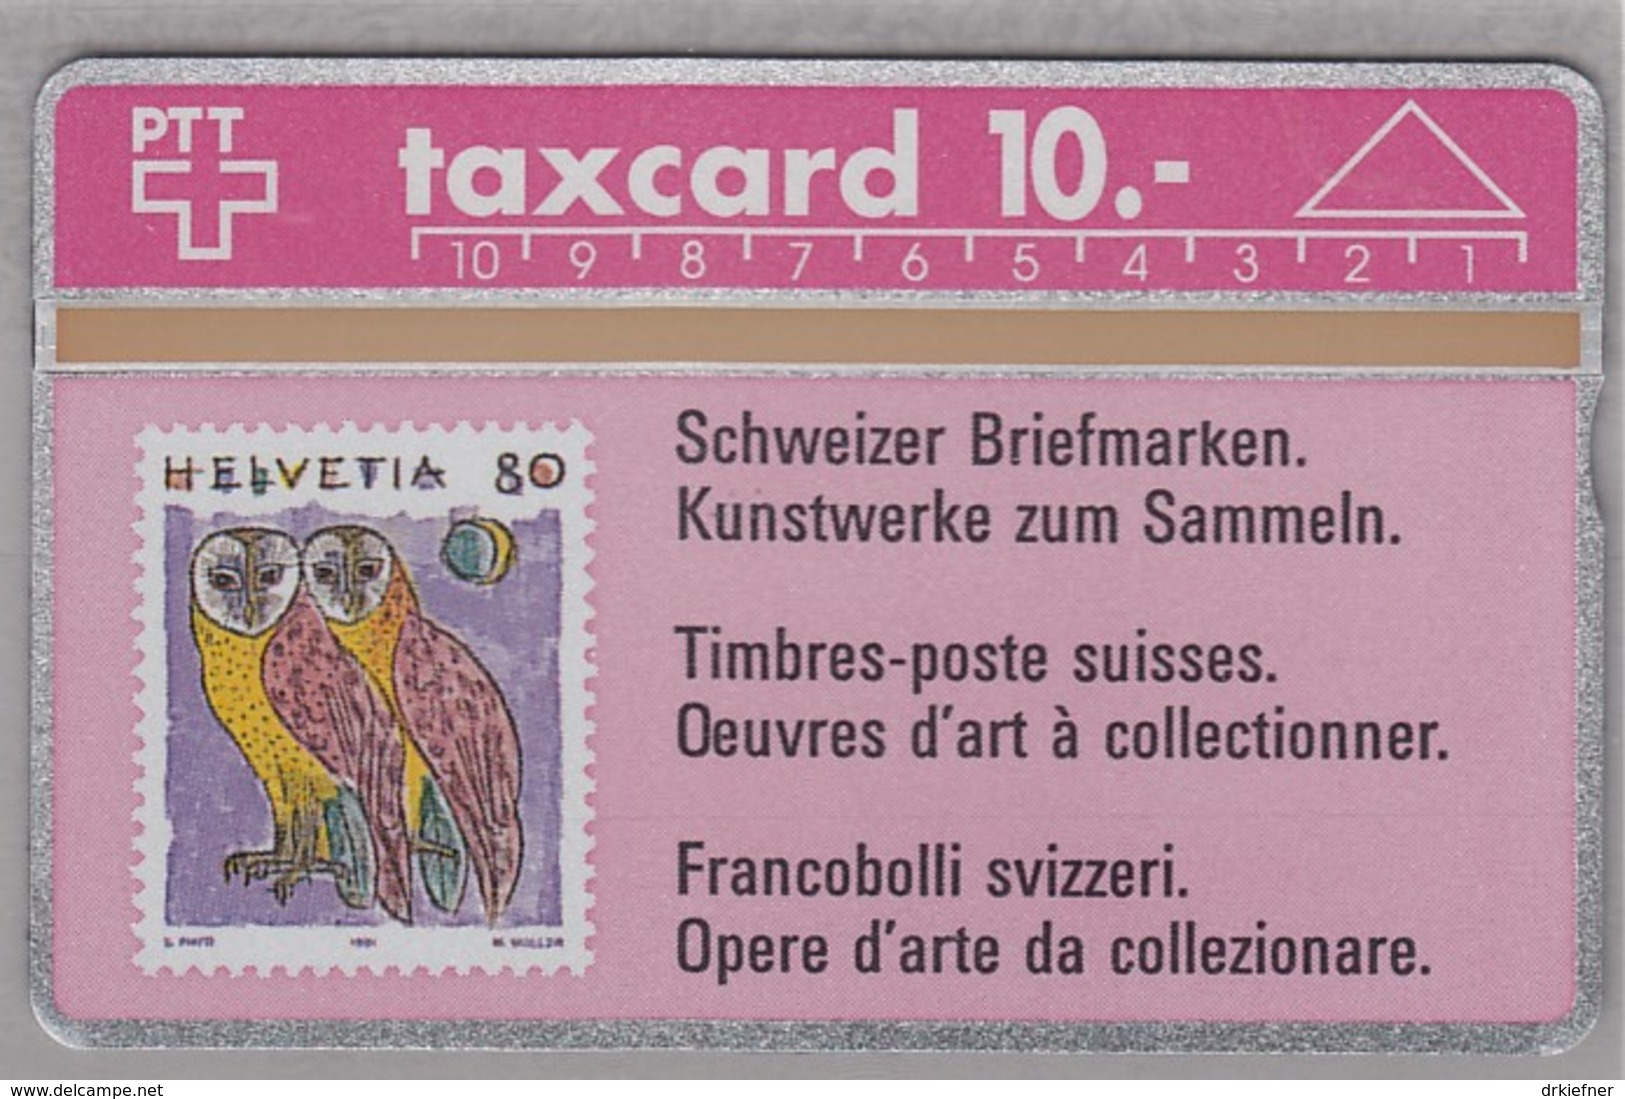 SCHWEIZ TELEFONKARTE Taxcard 10 SFr, Motiv MiNr. 1437, Schleiereule, 1991 - Francobolli & Monete